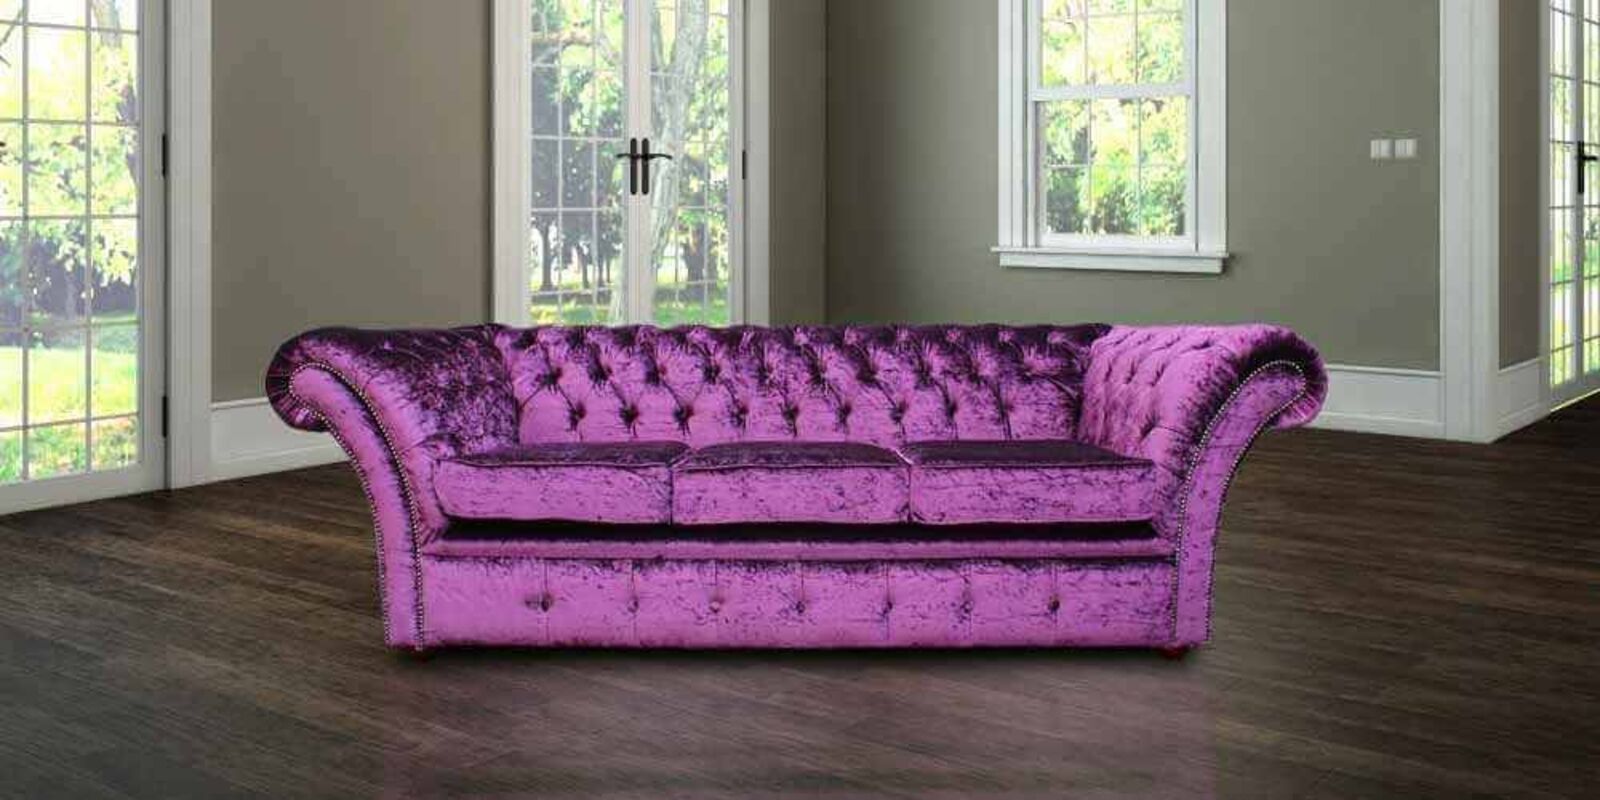 Product photograph of Chesterfield Cambridge Purple 3 Seater Sofa Settee Boutique Crush Velvet Fabric from Designer Sofas 4U